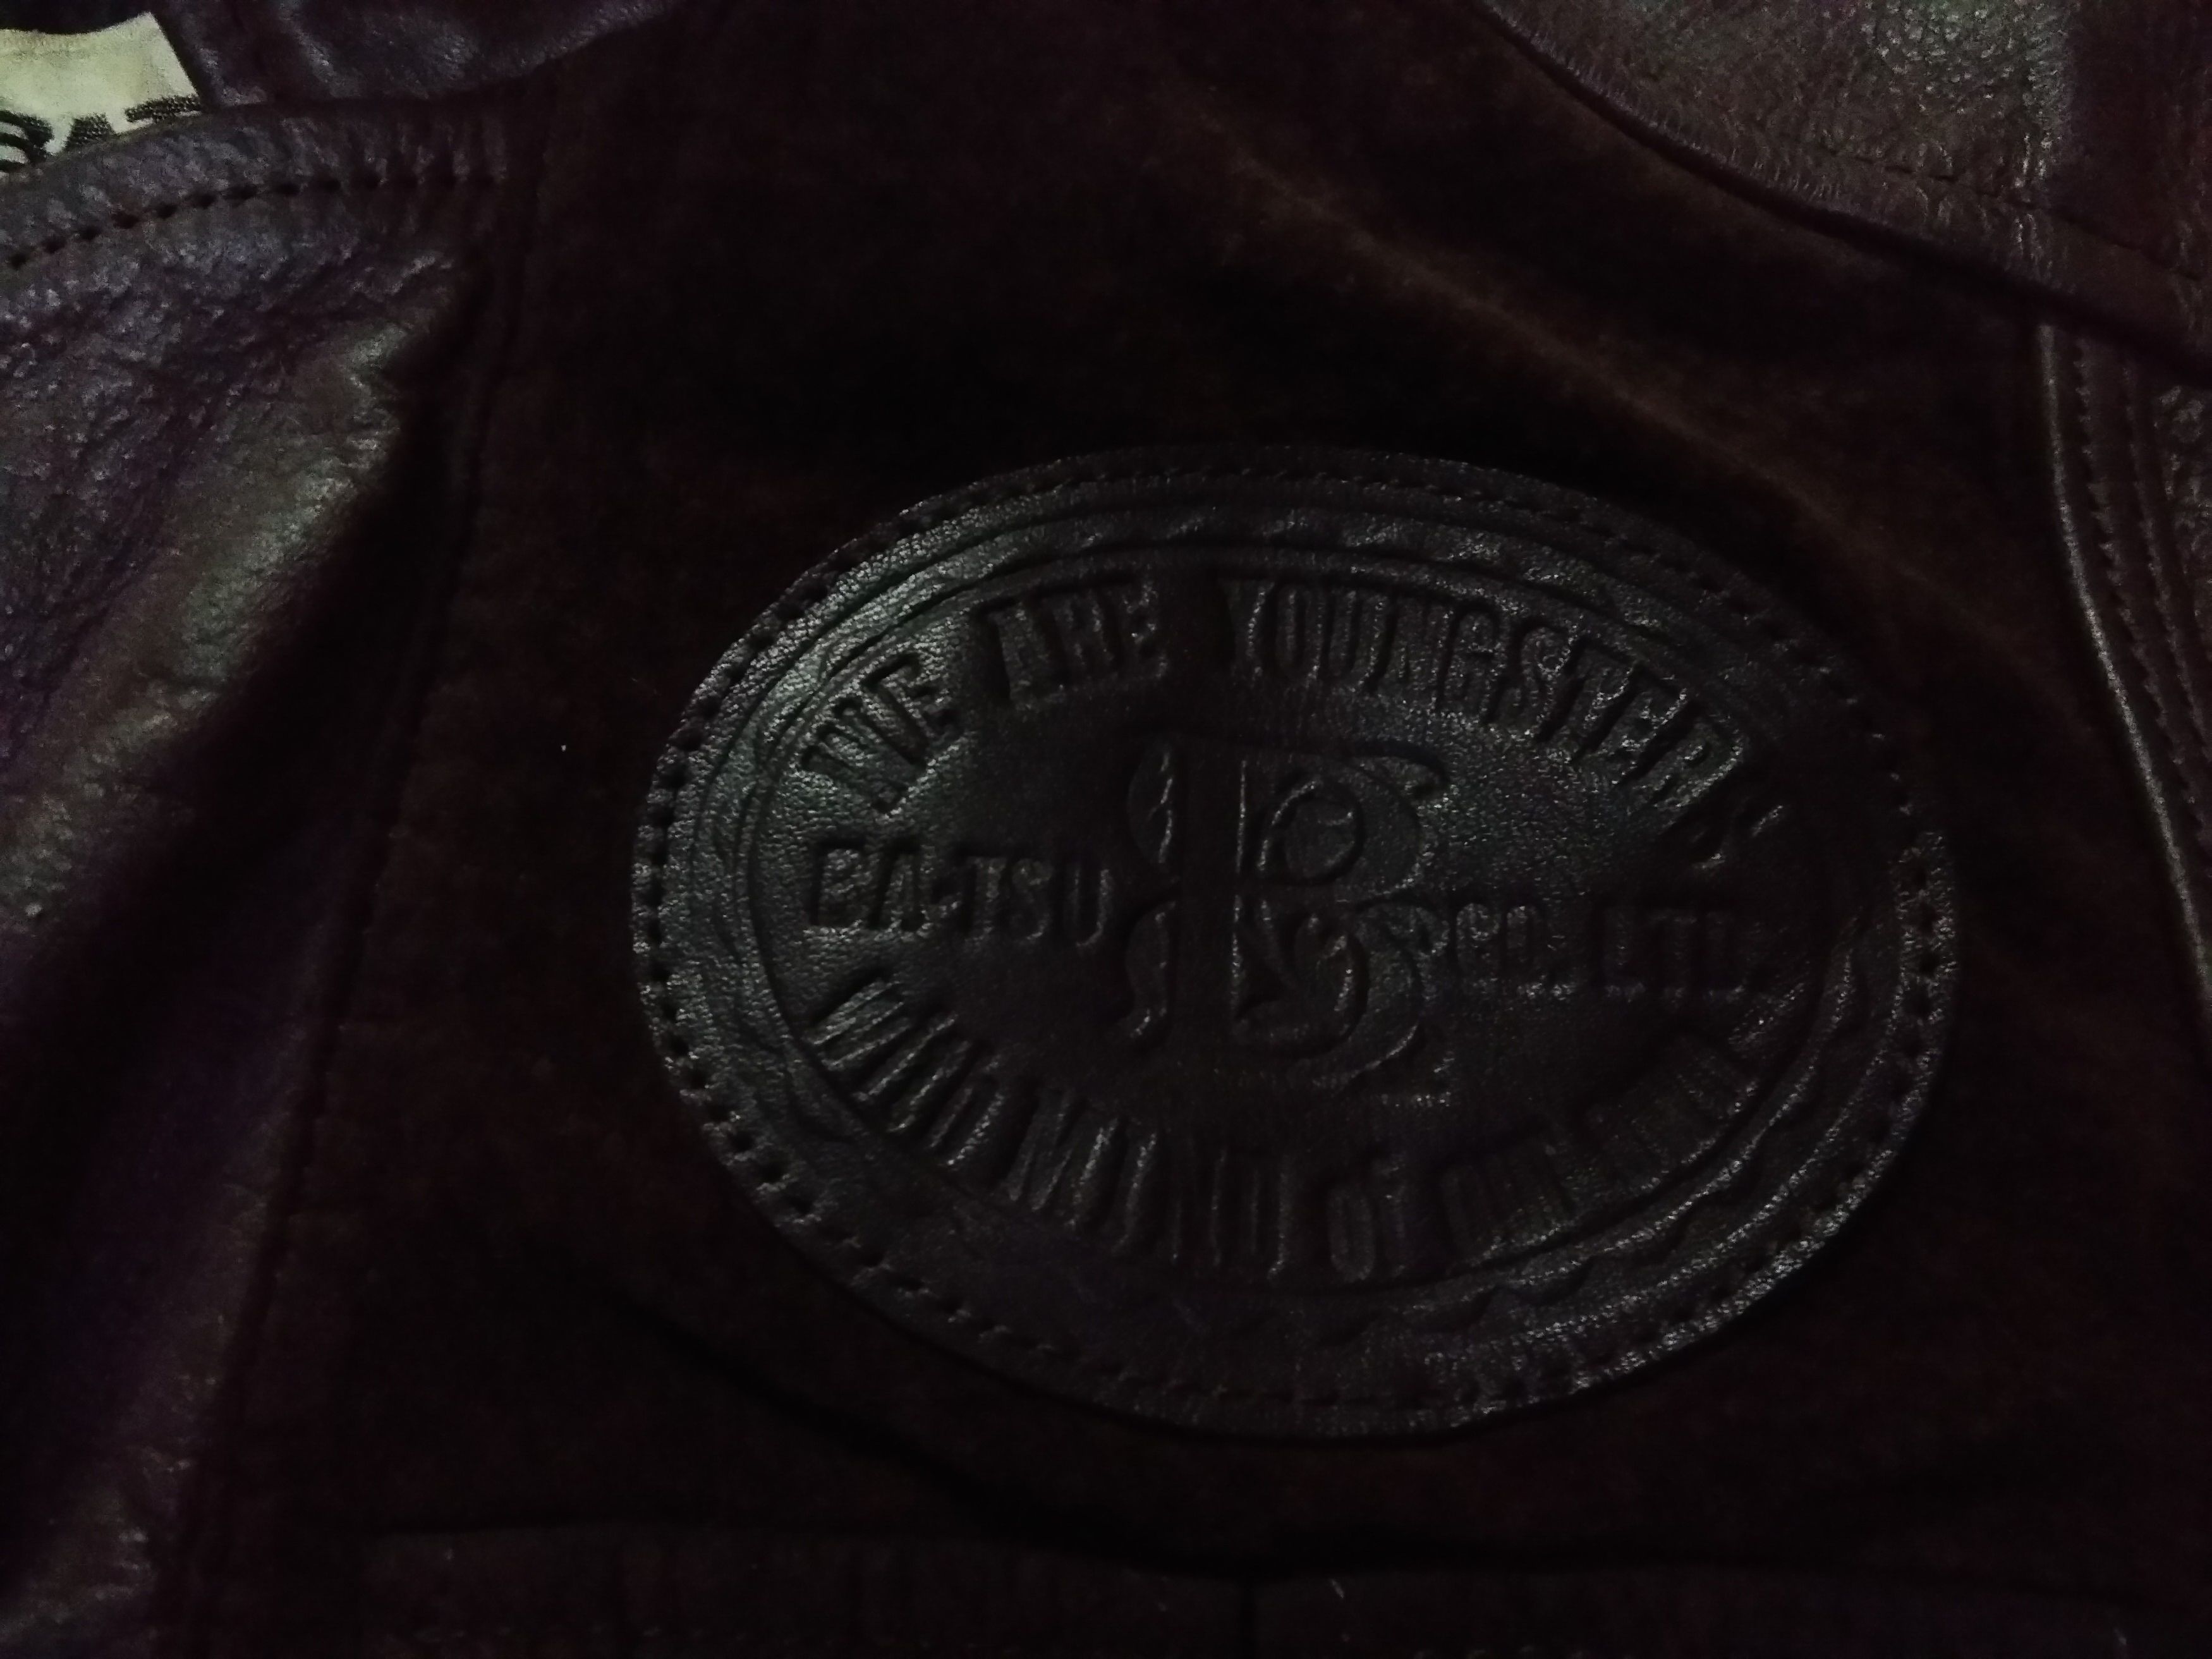 Japanese Brand Vintage Japanese Brand BA-TSU Leather Jacket Size US L / EU 52-54 / 3 - 7 Preview